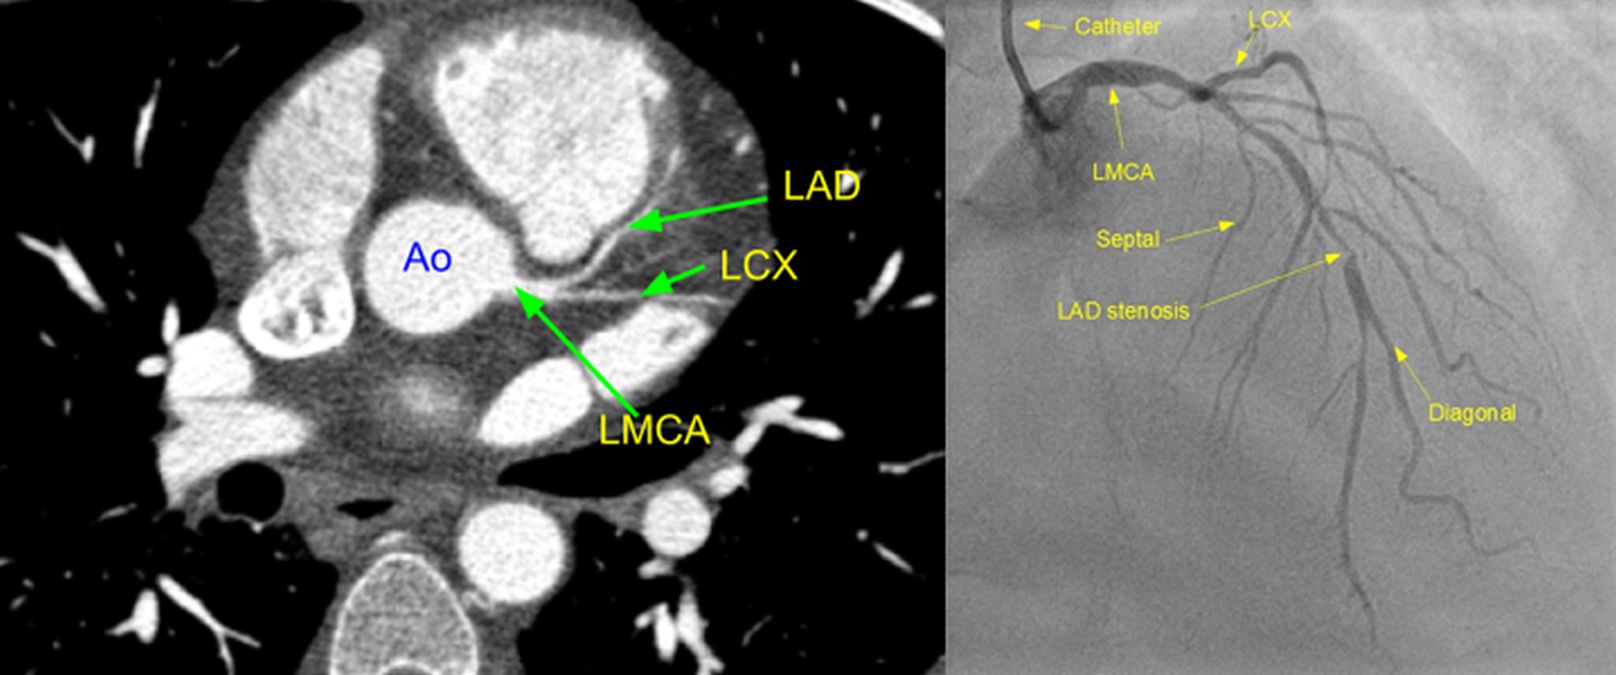 CT vs invasive coronary angiography